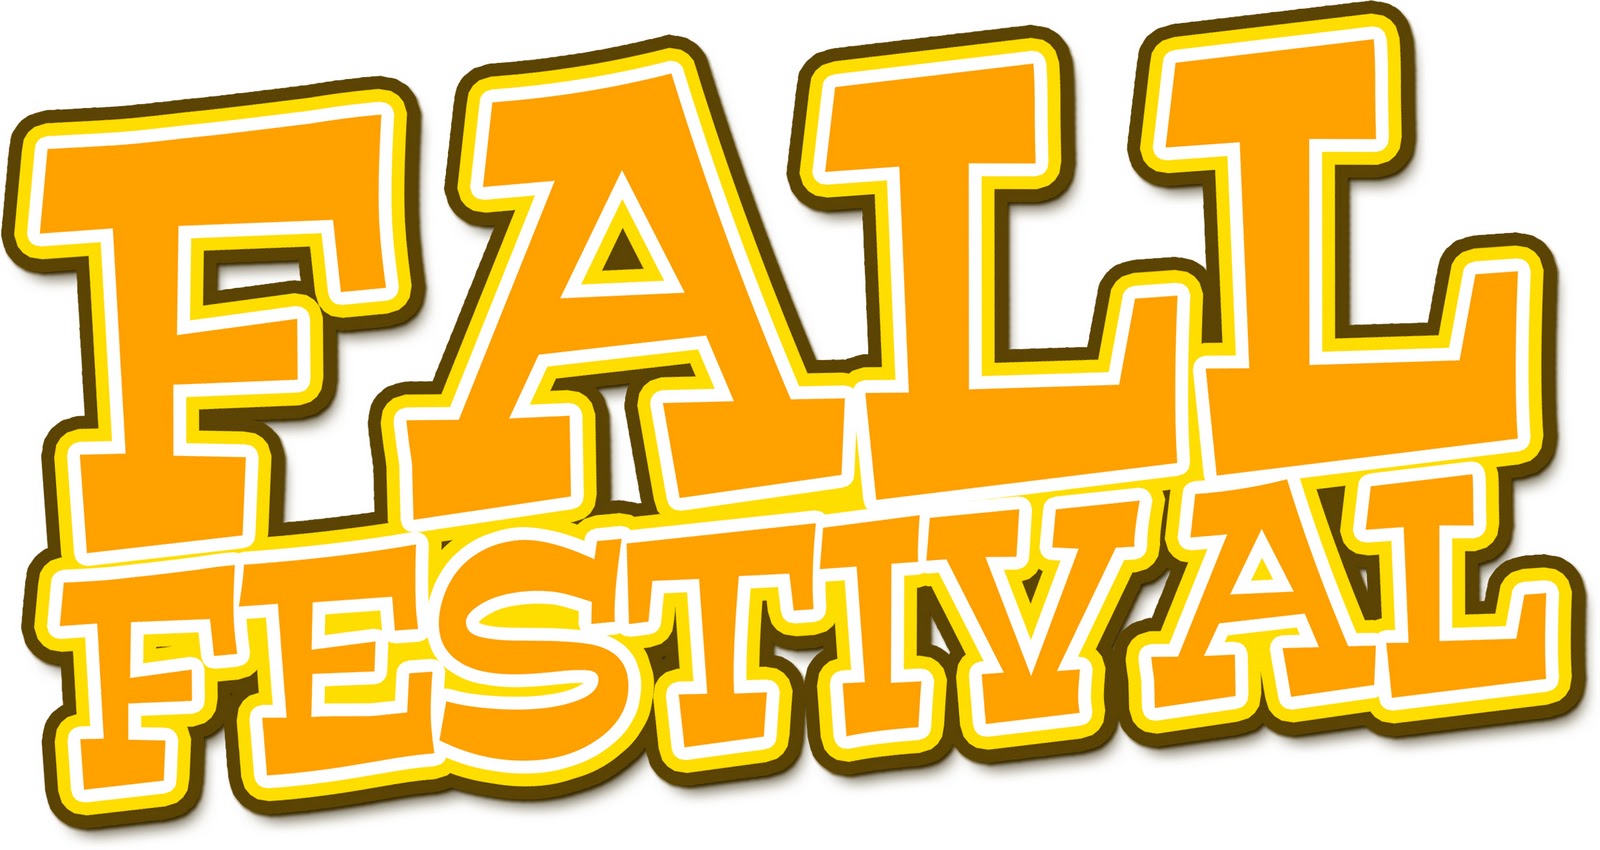 Fall festival community festival clipart